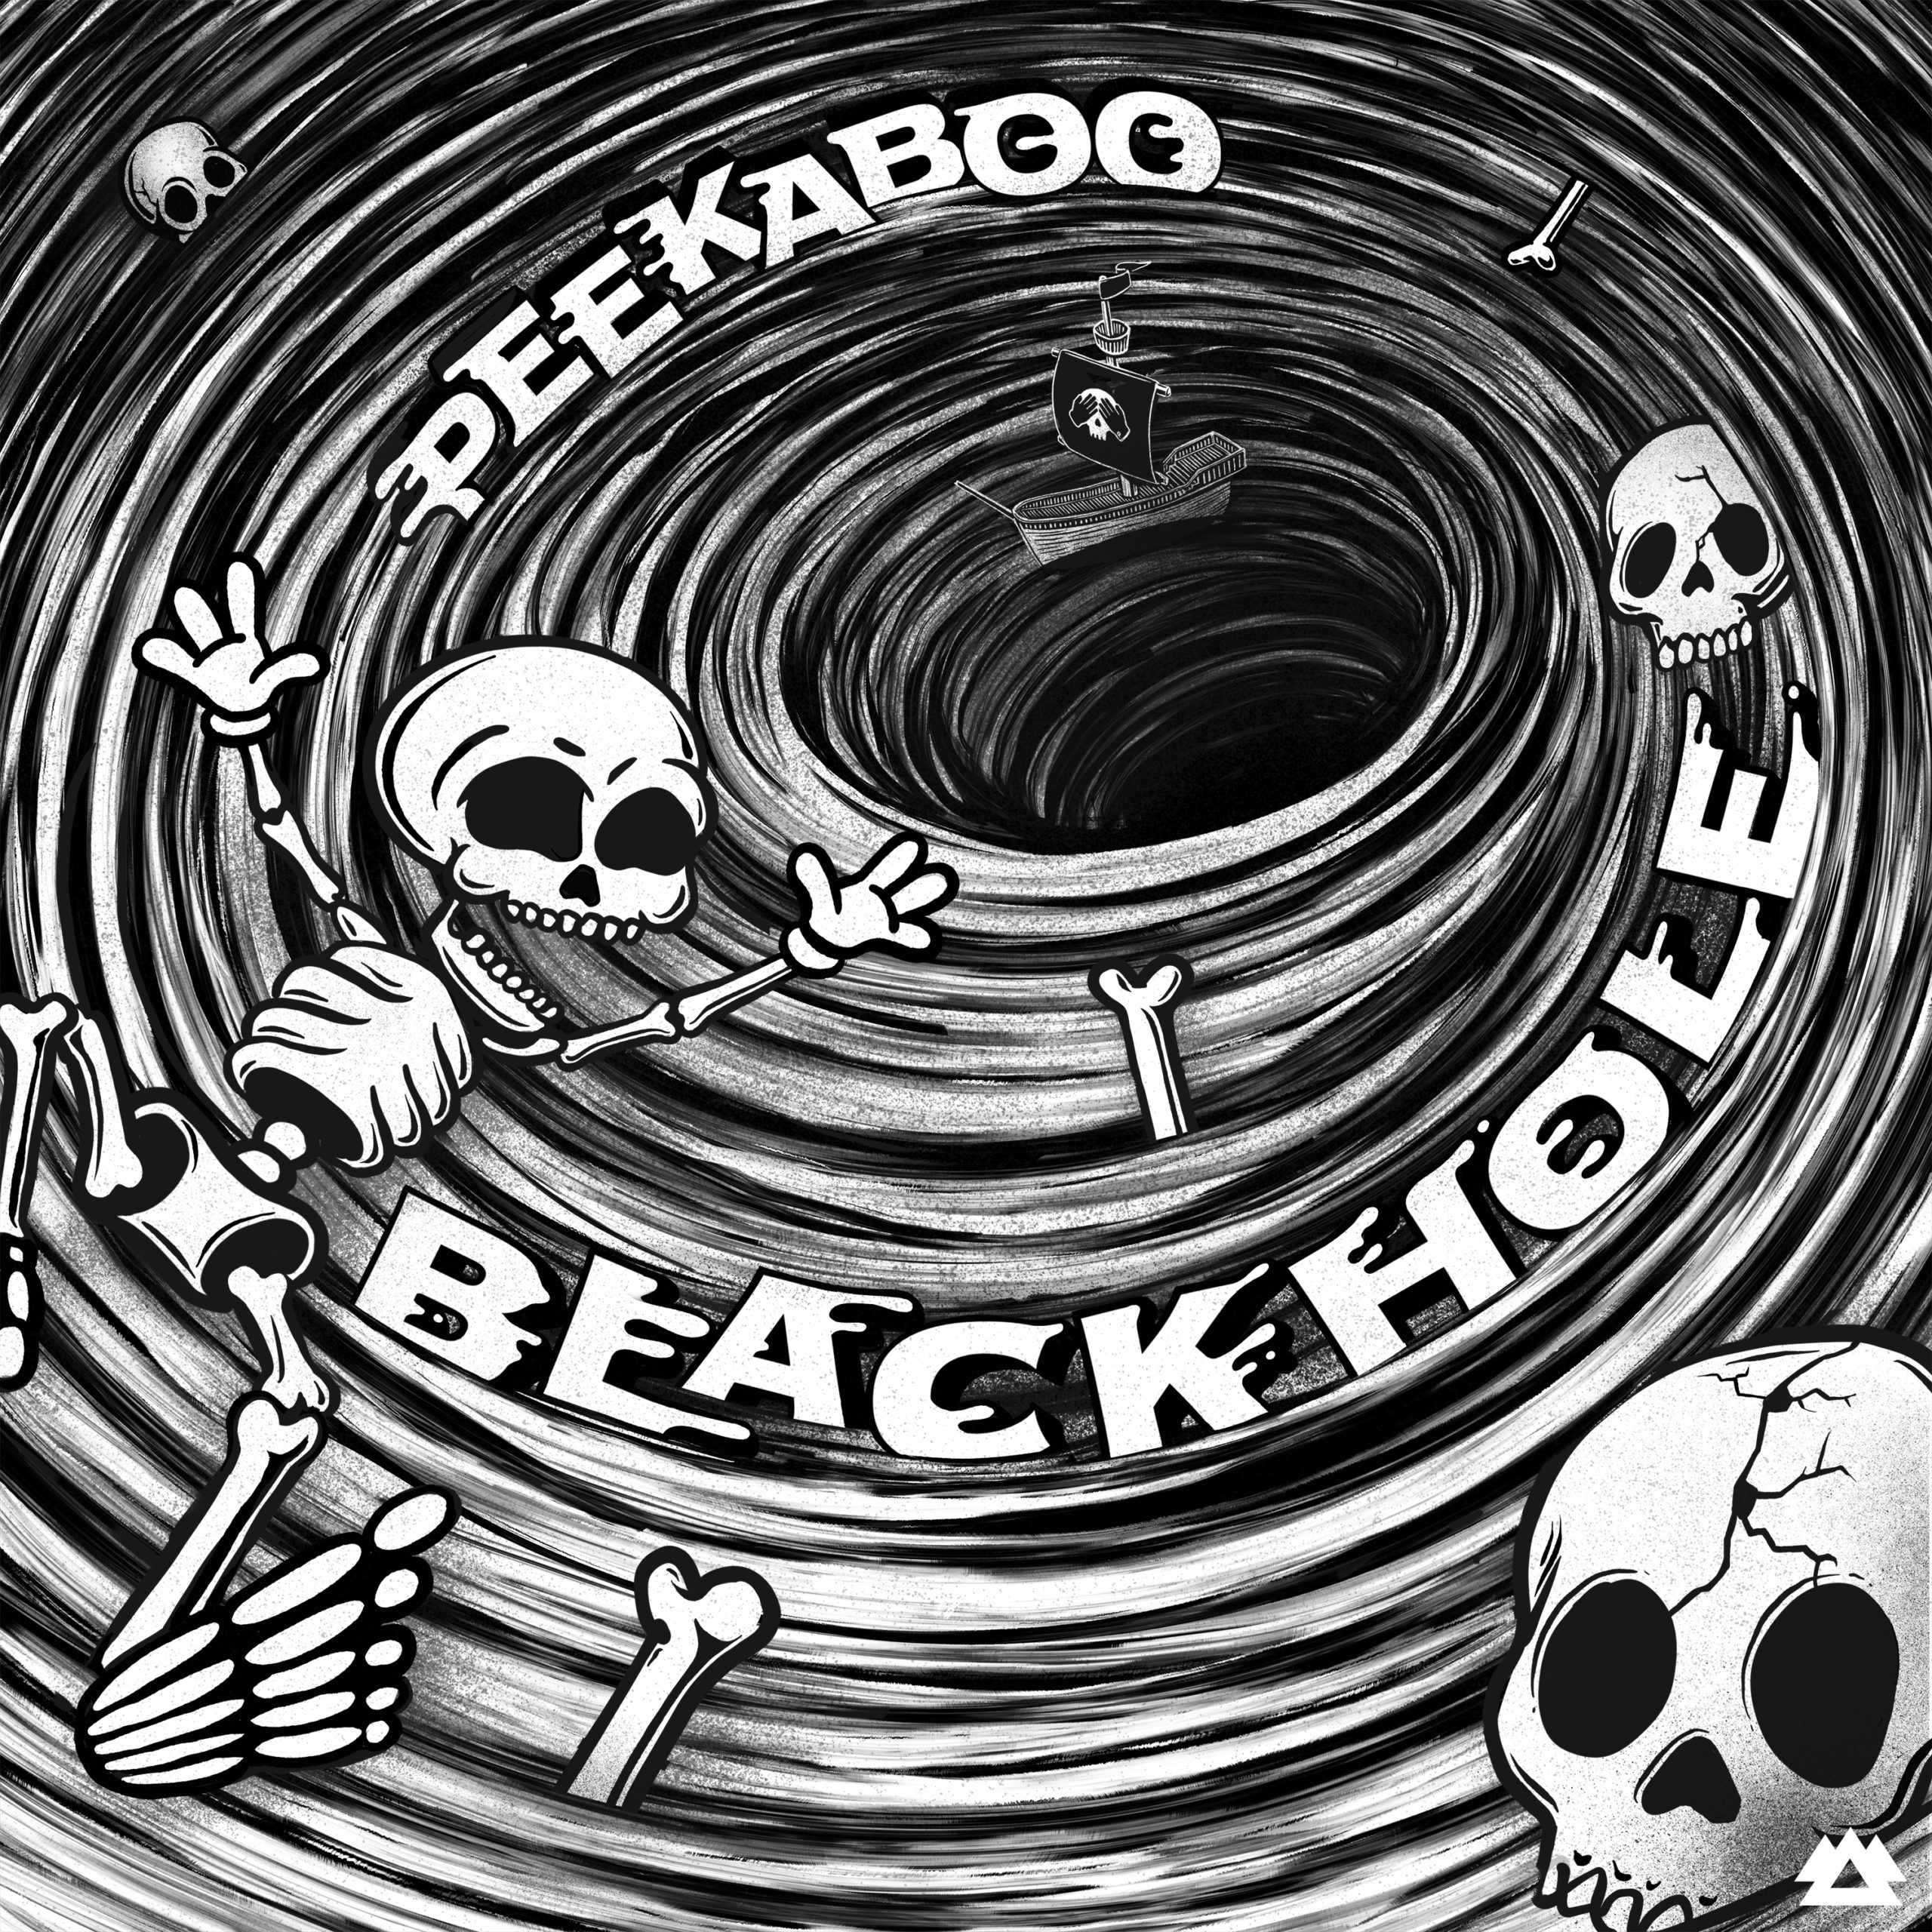 PEEKABOO Returns to WAKAAN With “Black Hole”